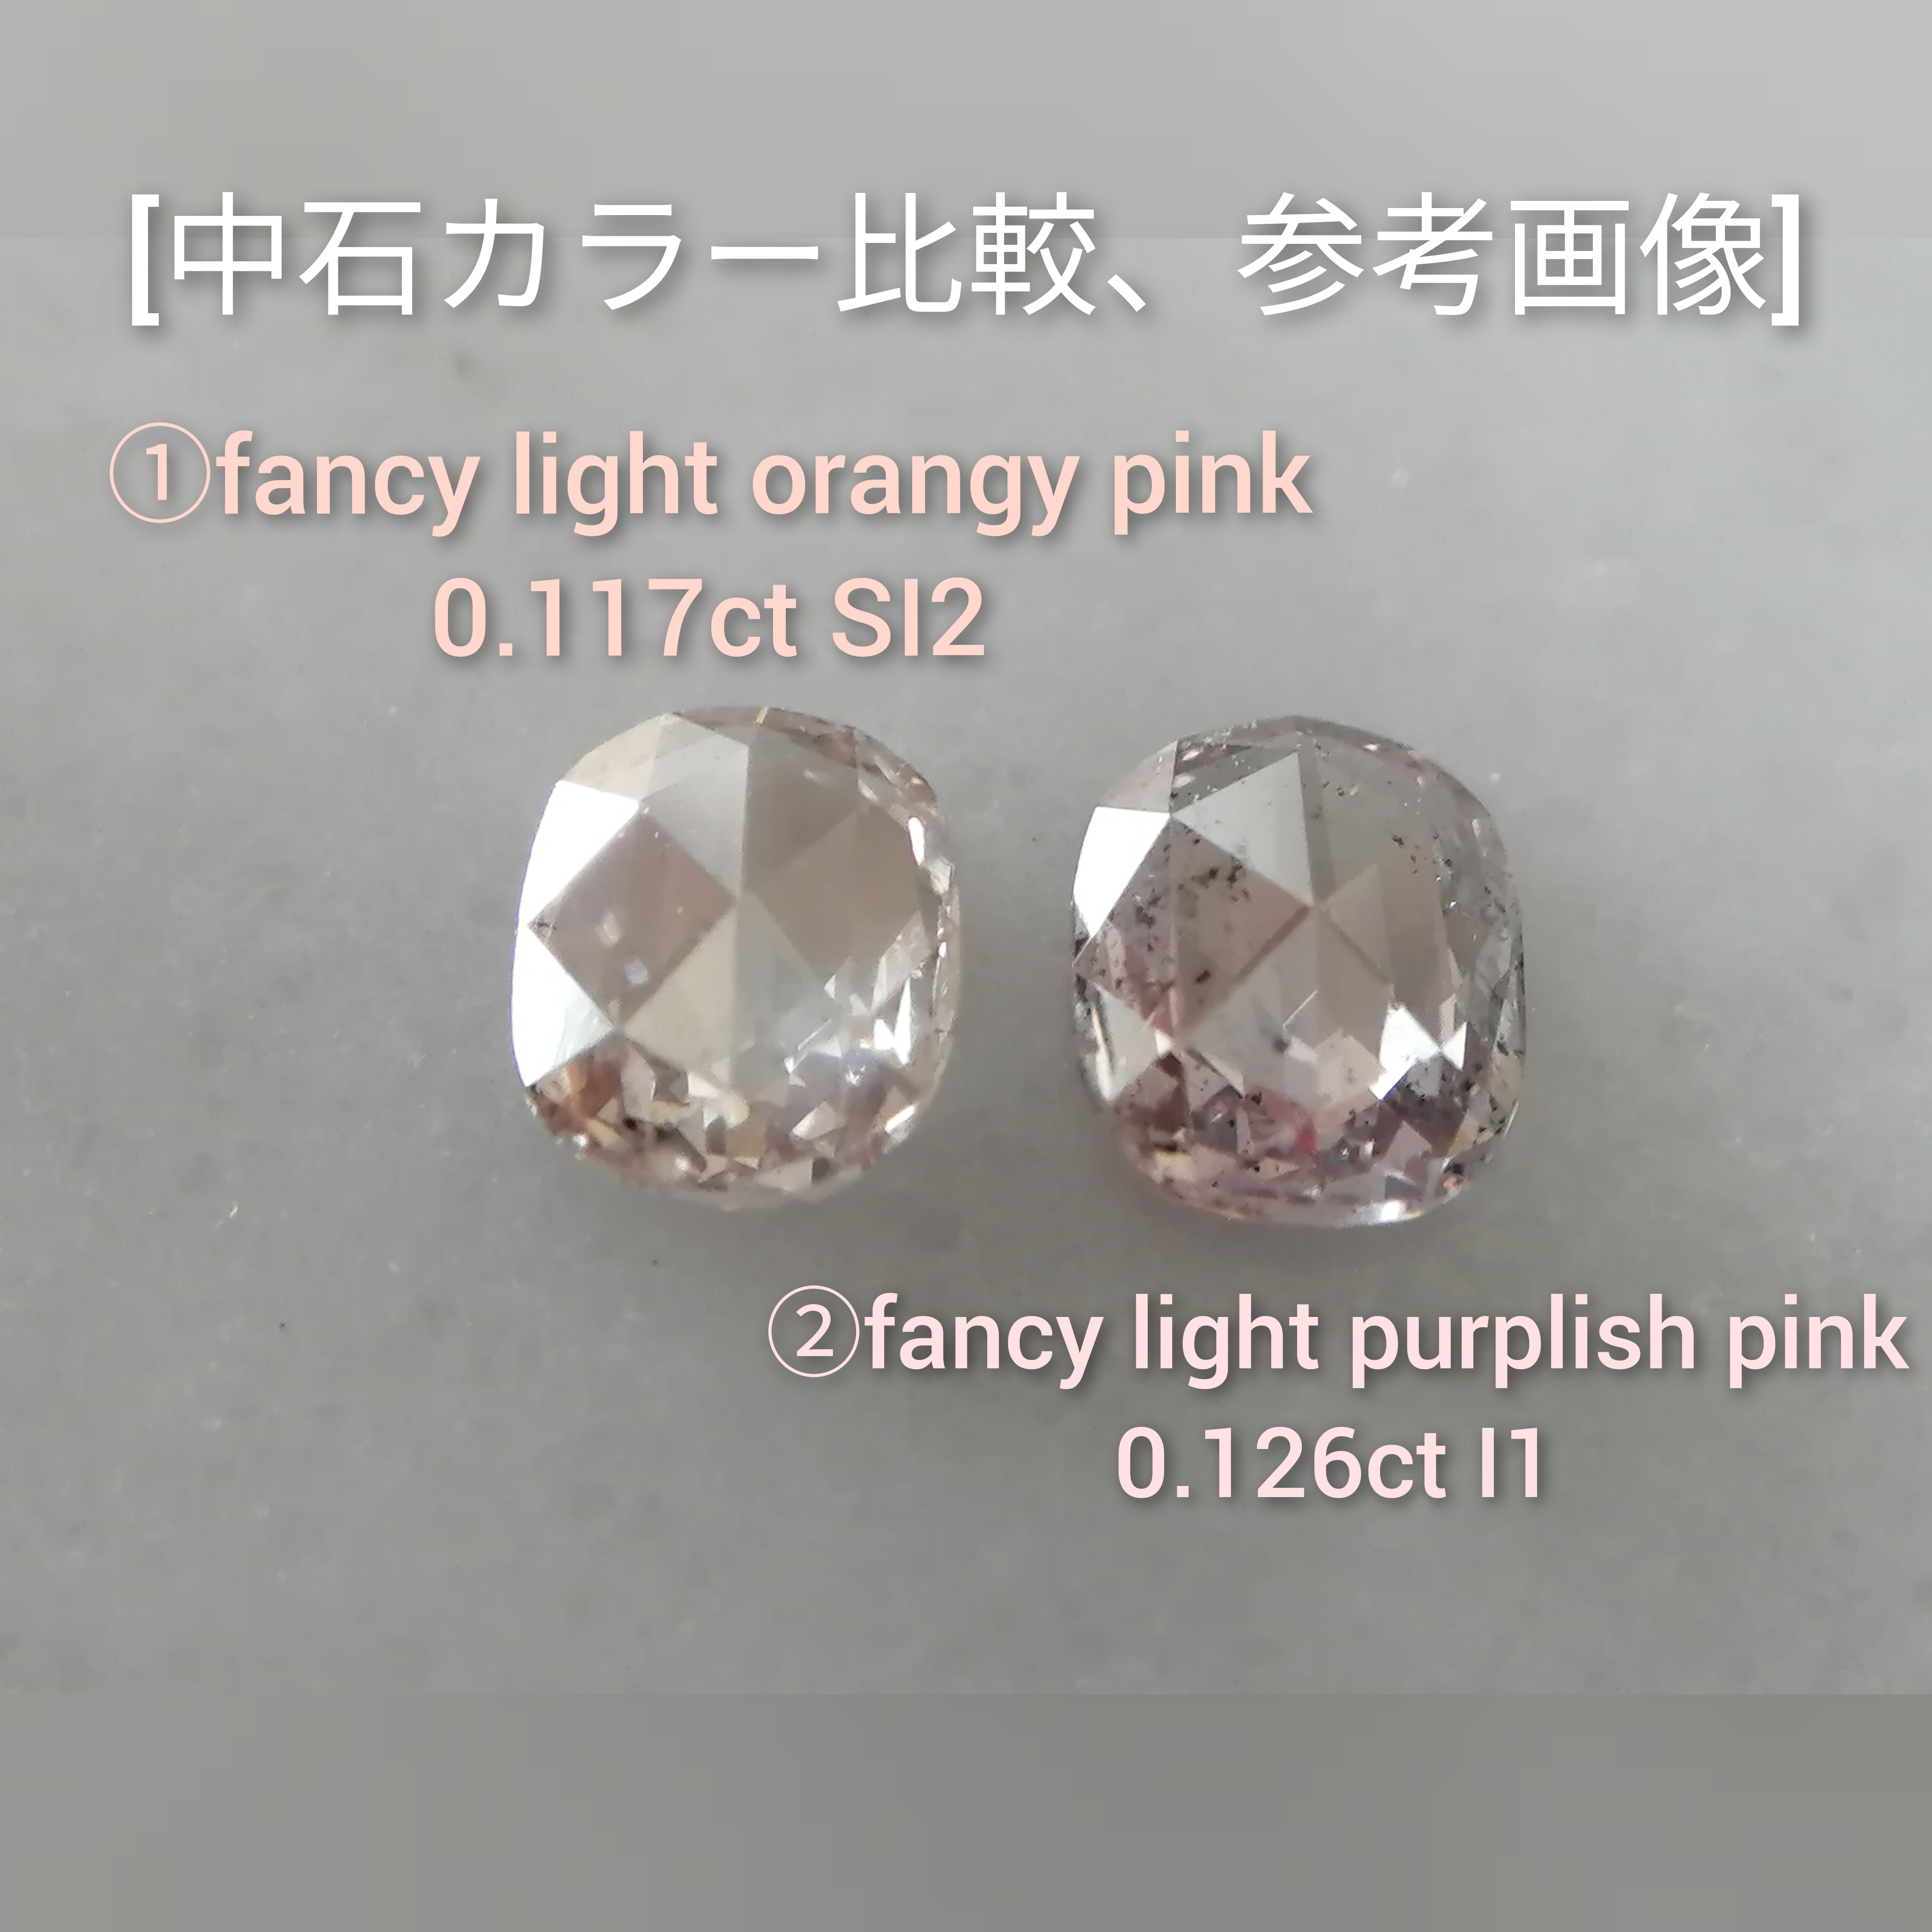 0.129ct LIGHT PINK BROWN 天然ダイヤモンド ルース kanfa720.com